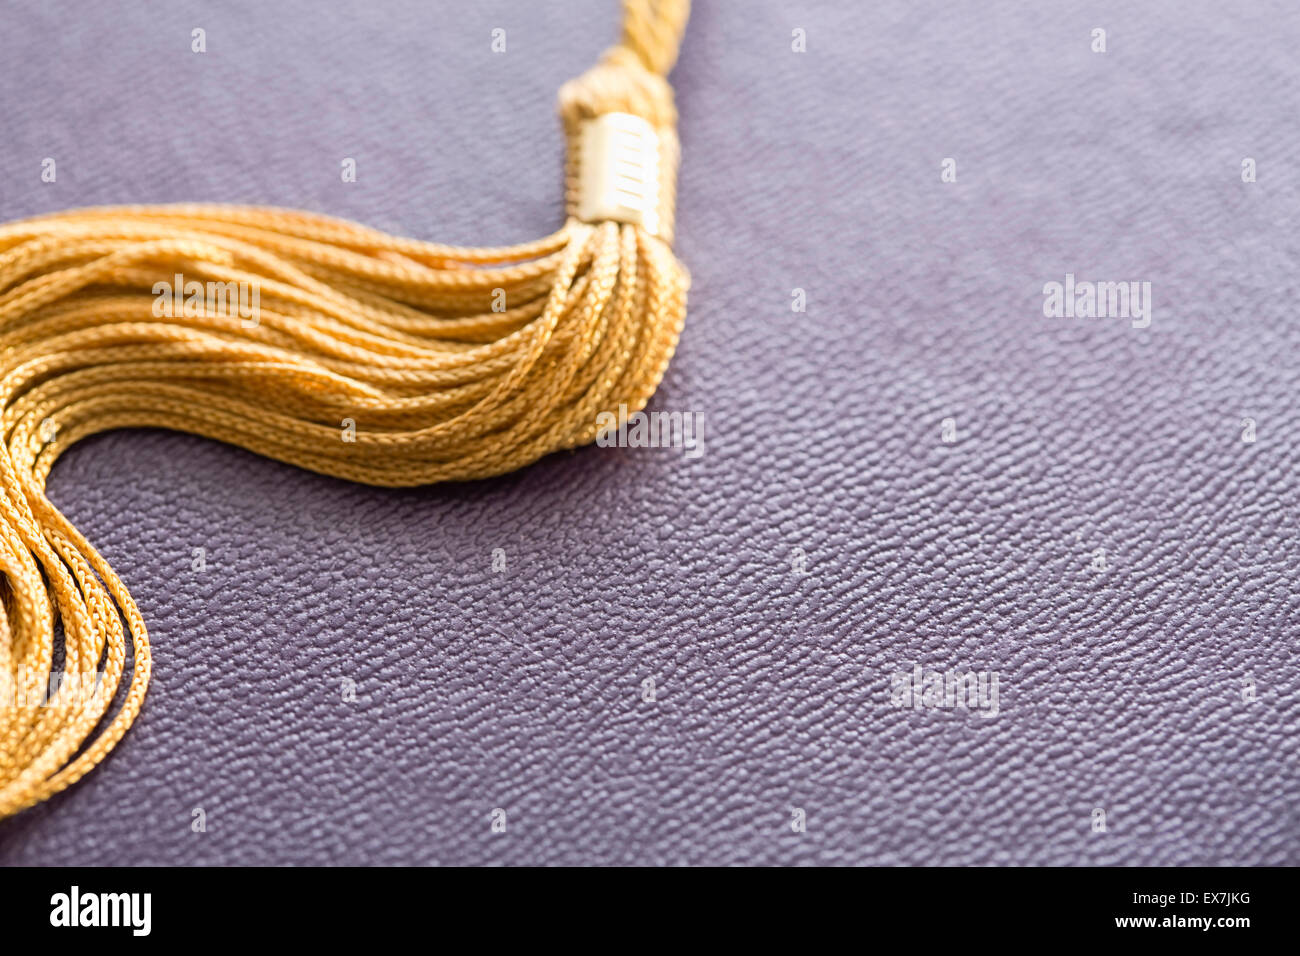 Close-up view of graduation tassel Stock Photo